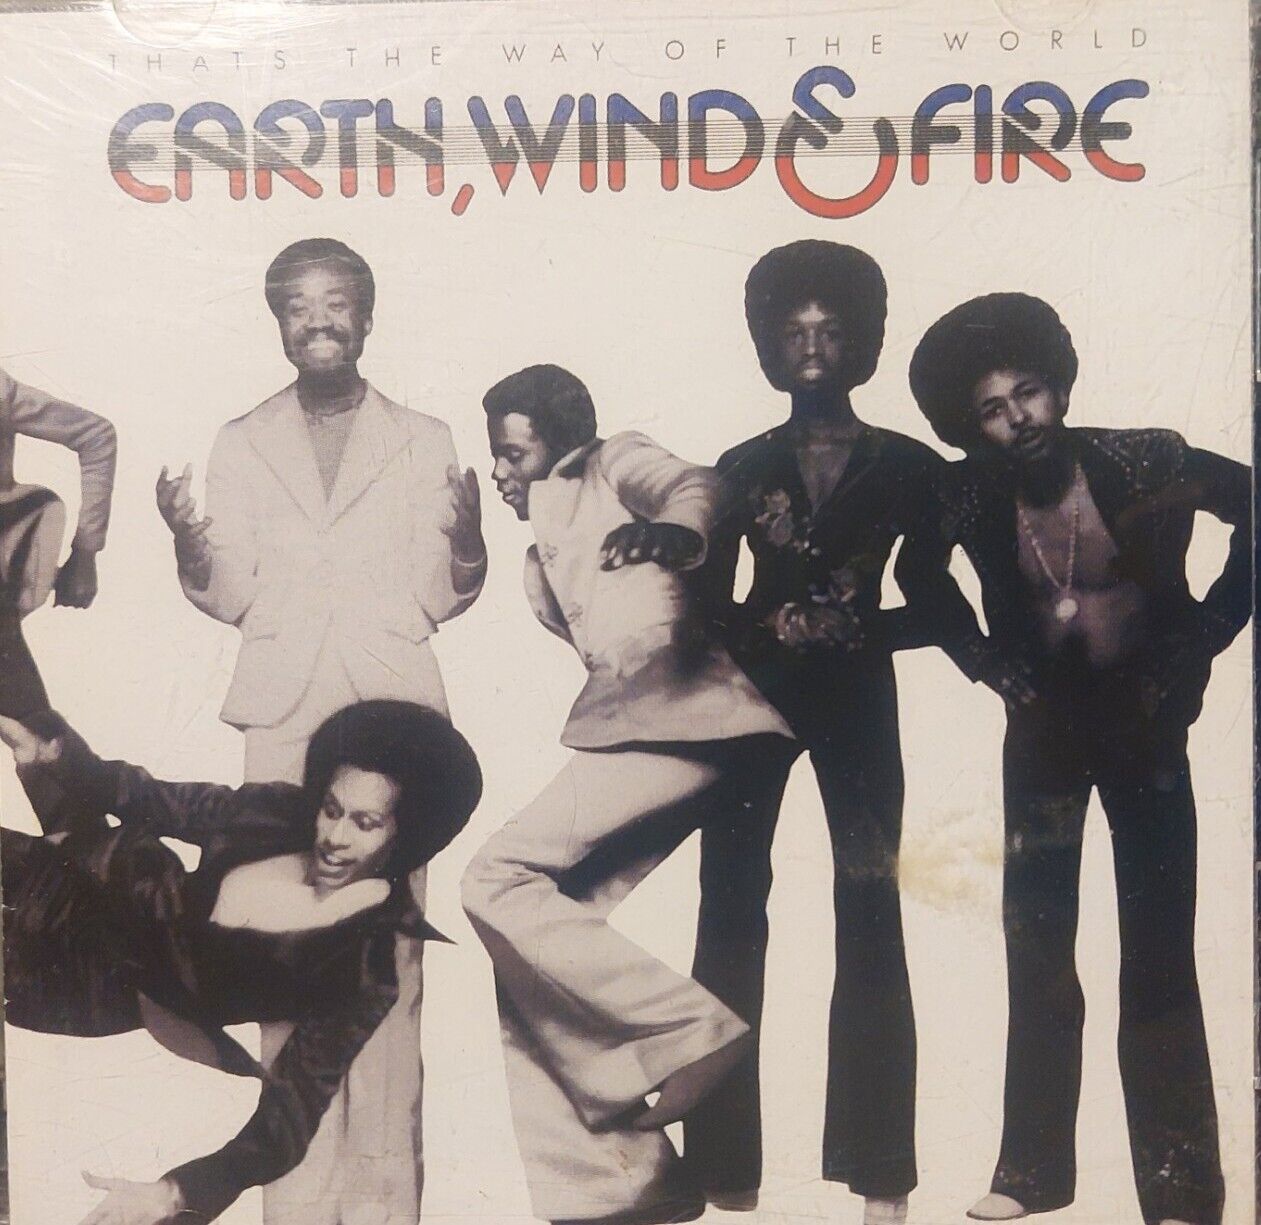 Earth Wind & Fire : That's the Way of the World (Bonus Tracks) - Audio CD